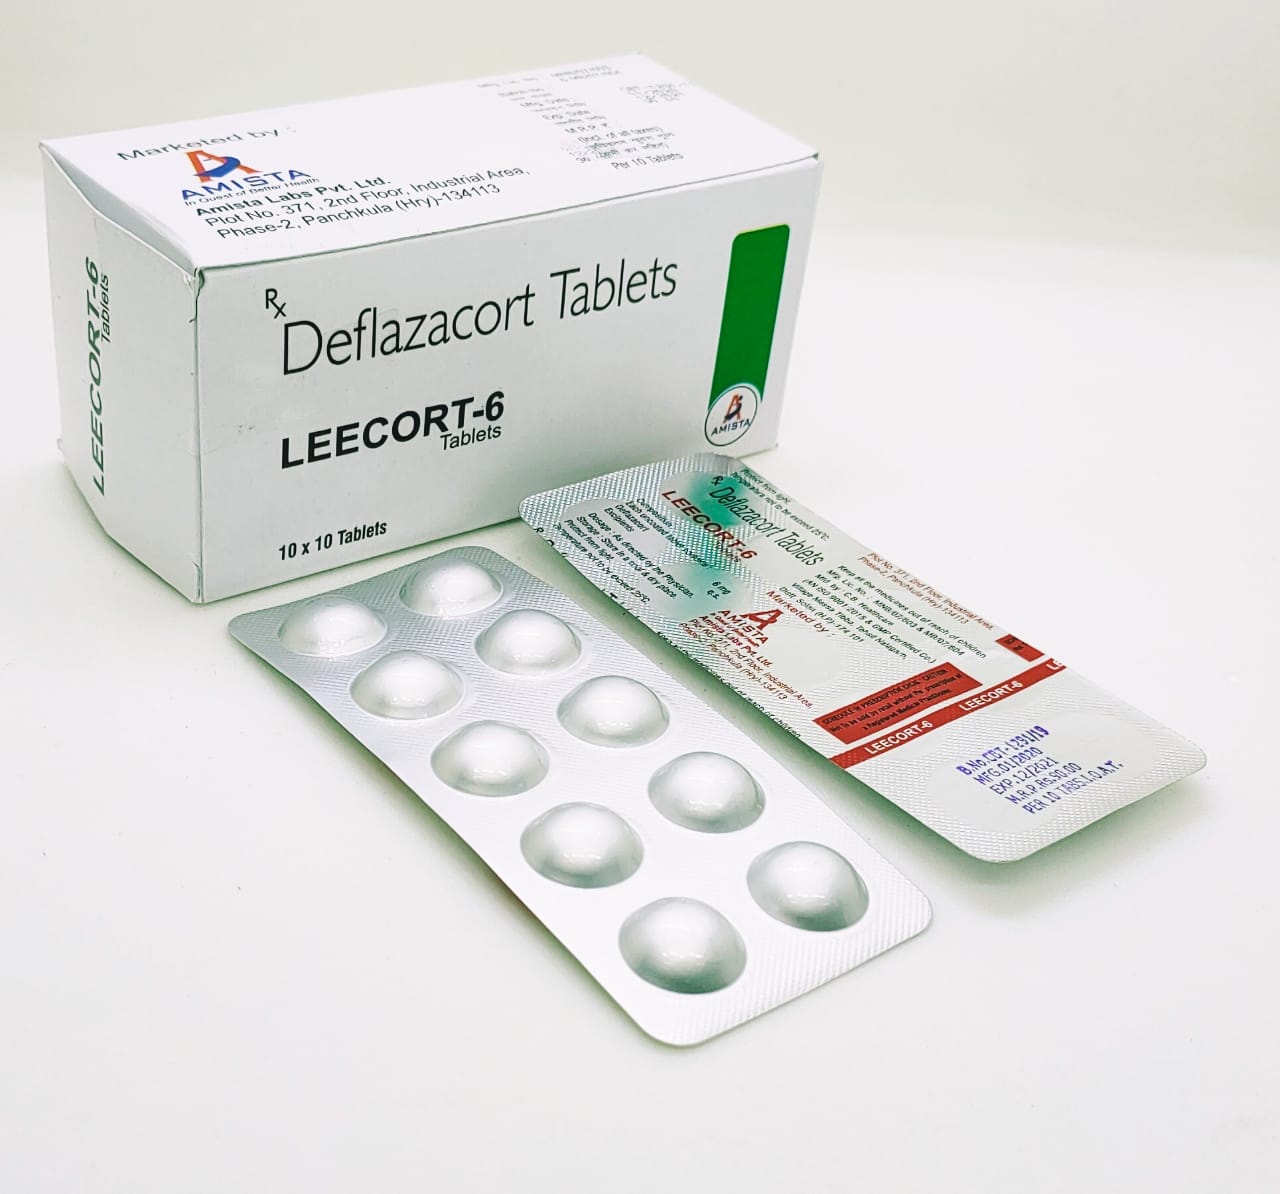 leecort-6 tablets